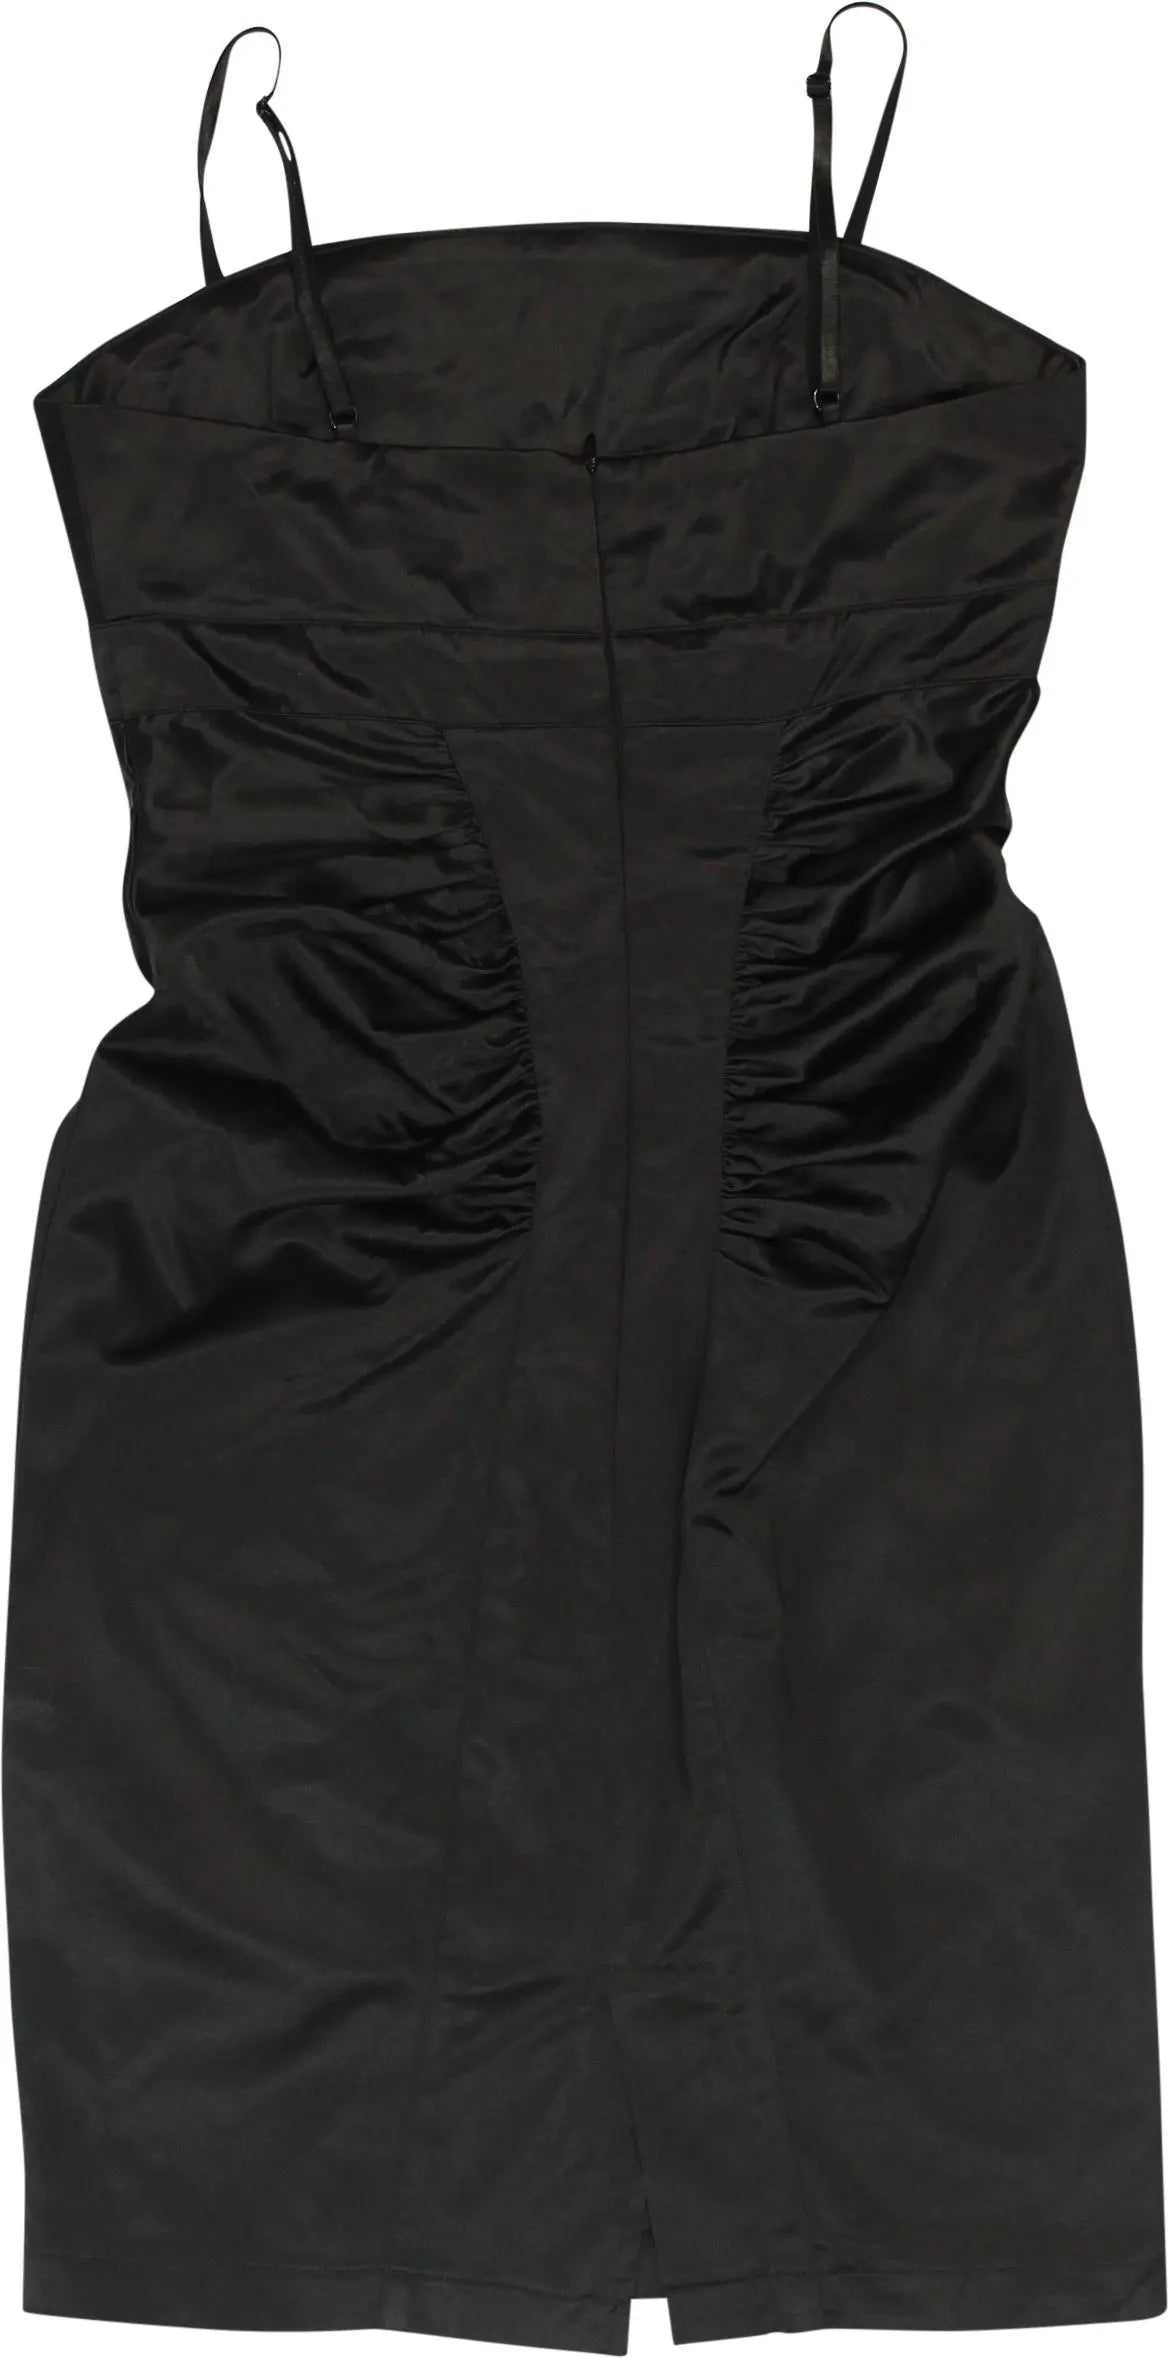 Lady Dutch - Satin Black Mini Dress- ThriftTale.com - Vintage and second handclothing